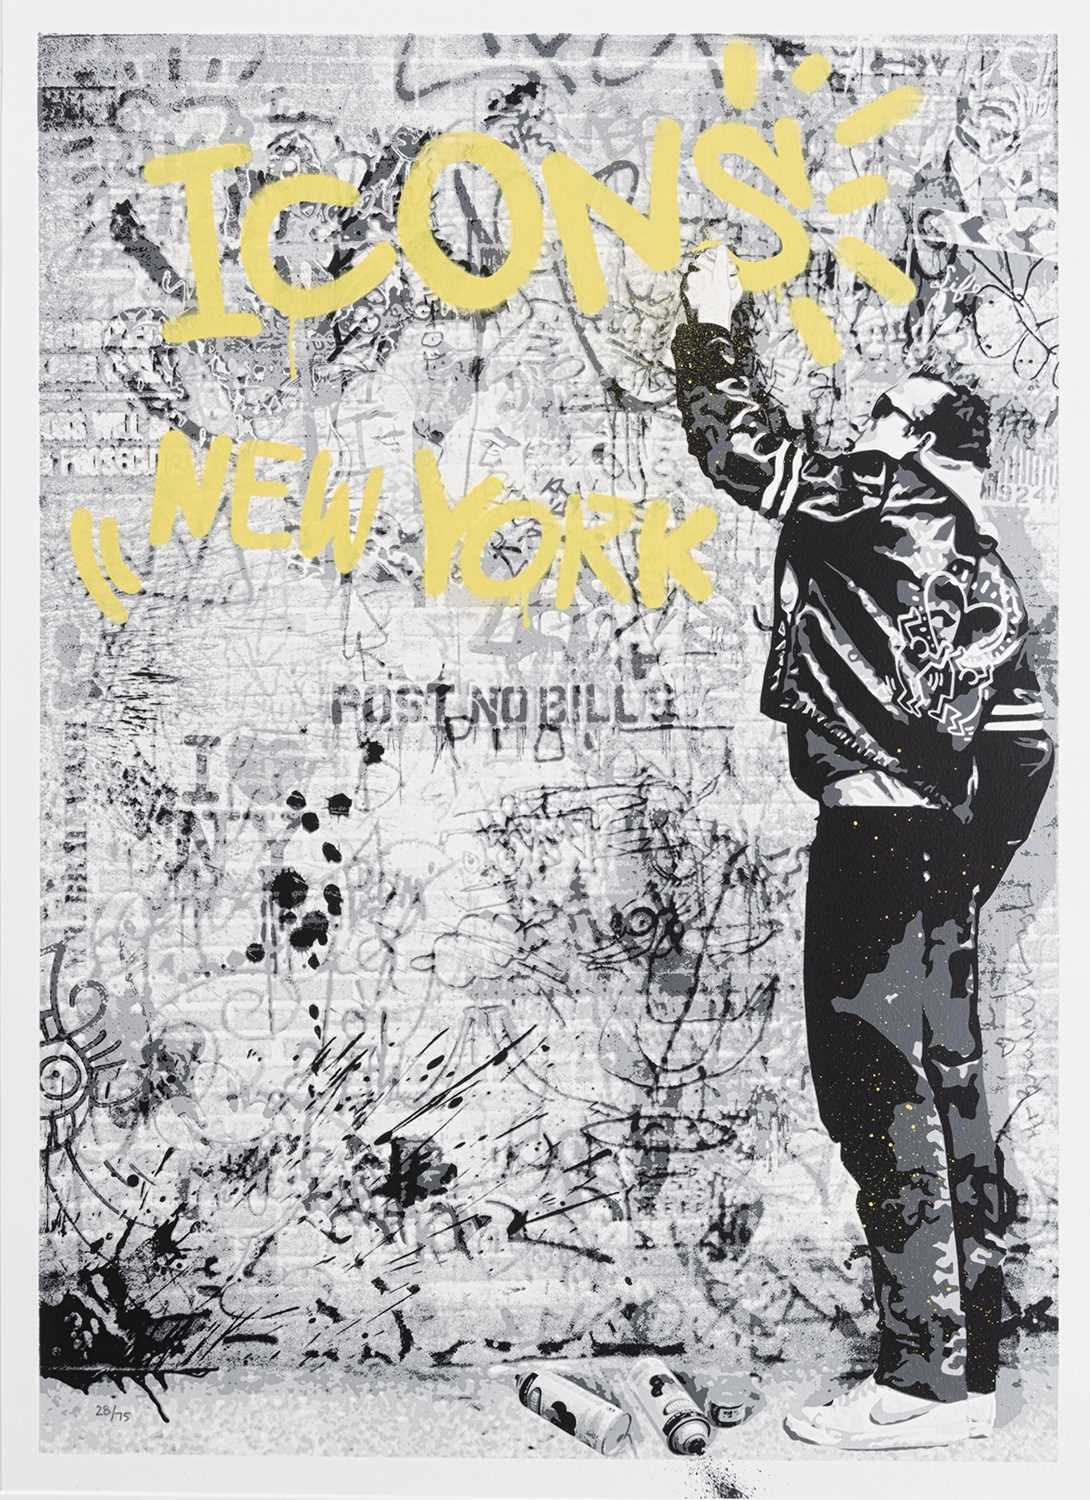 Lot 125 - Mr Brainwash (French 1966-),' New York Icons - Keith Haring' (Yellow), 2009